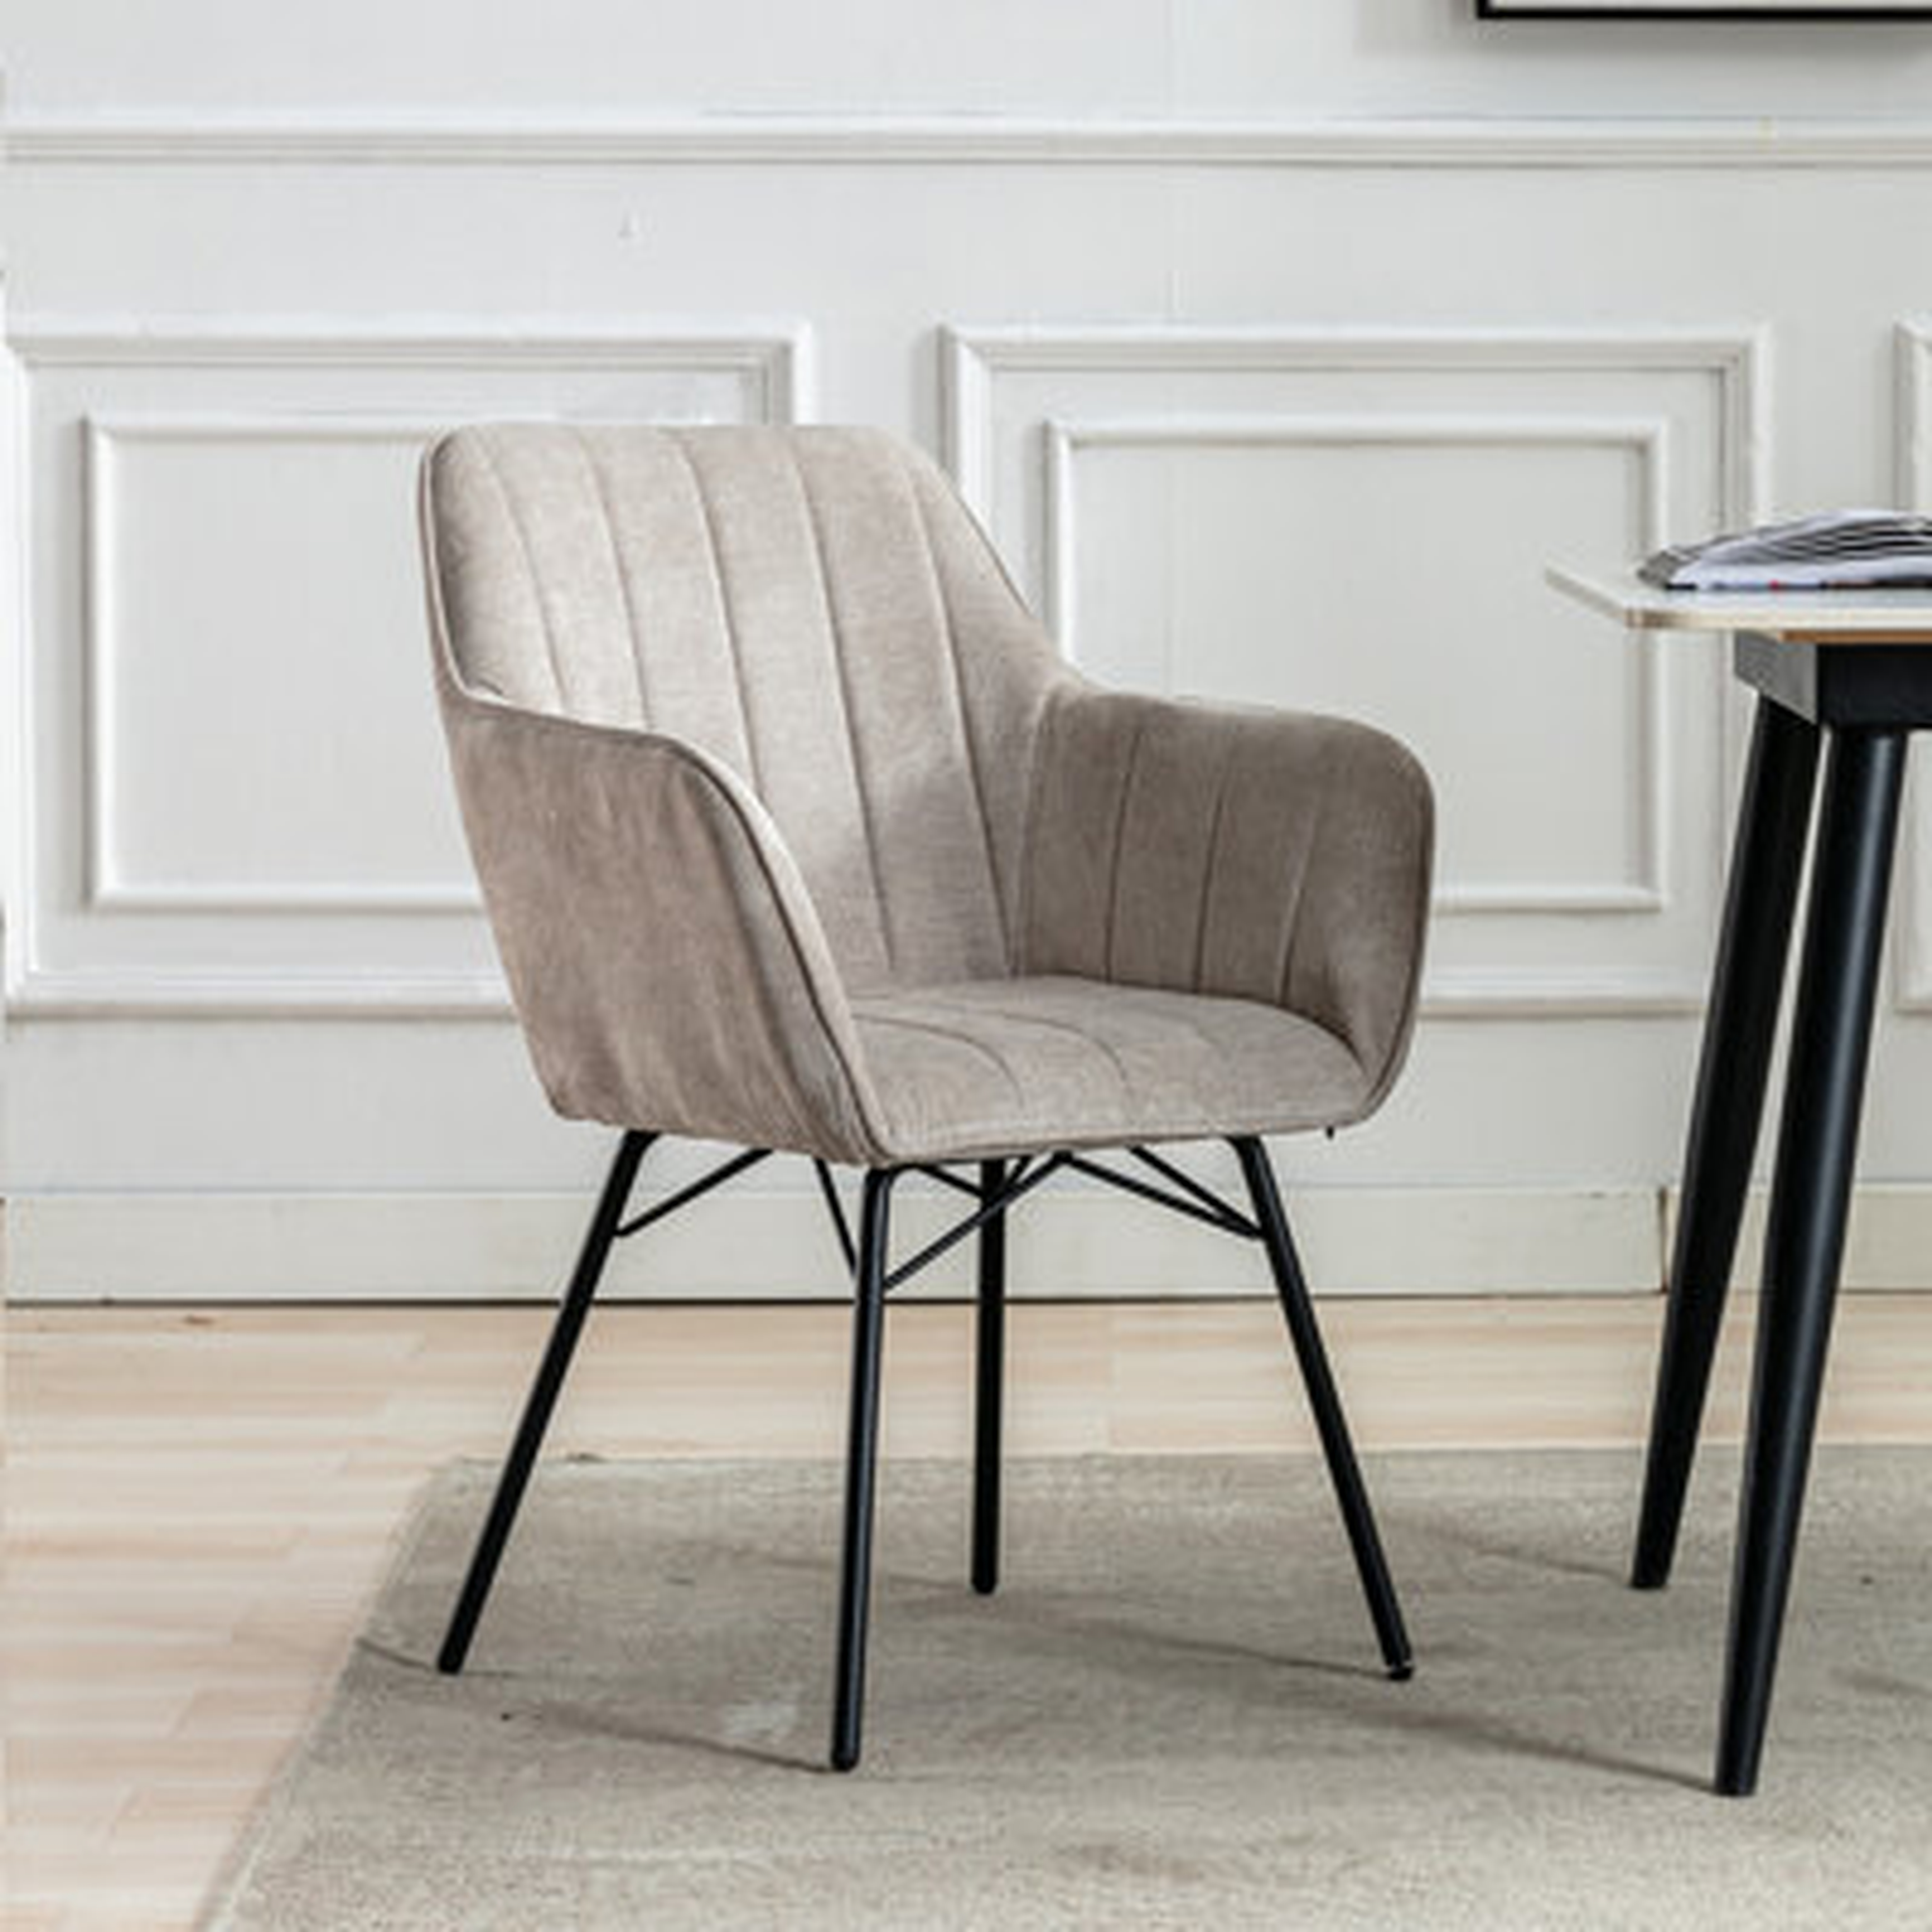 Modern Dining Room Chair Tufted Accent Chair - Wayfair